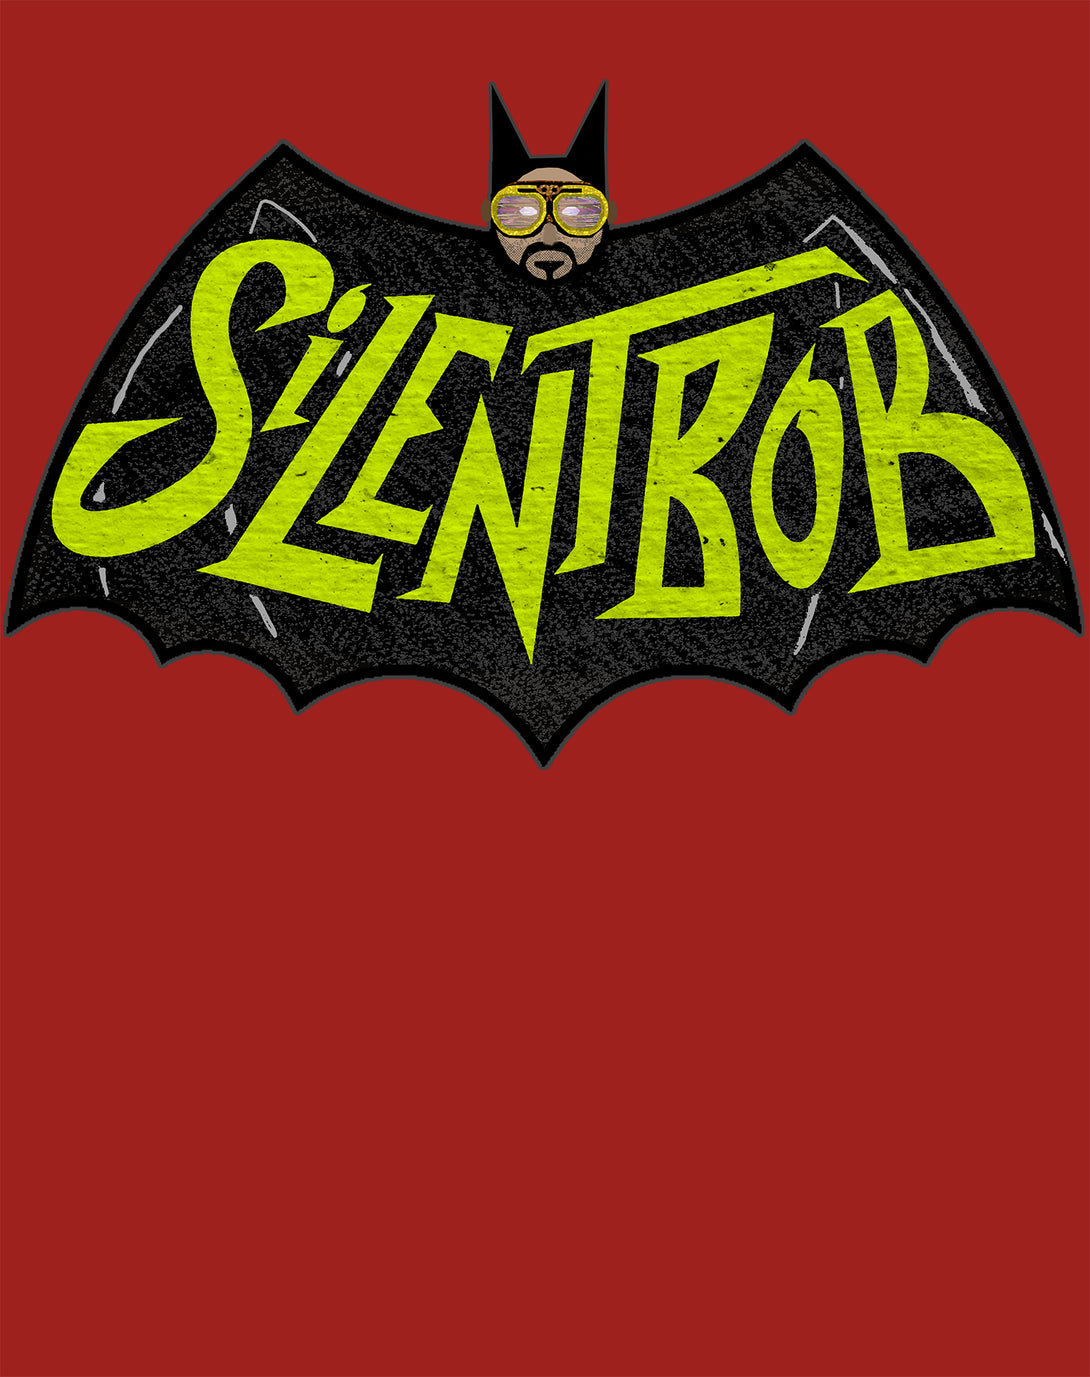 Kevin Smith View Askewniverse Logo Silent Bat Bob Official Men's T-Shirt Red - Urban Species Design Close Up